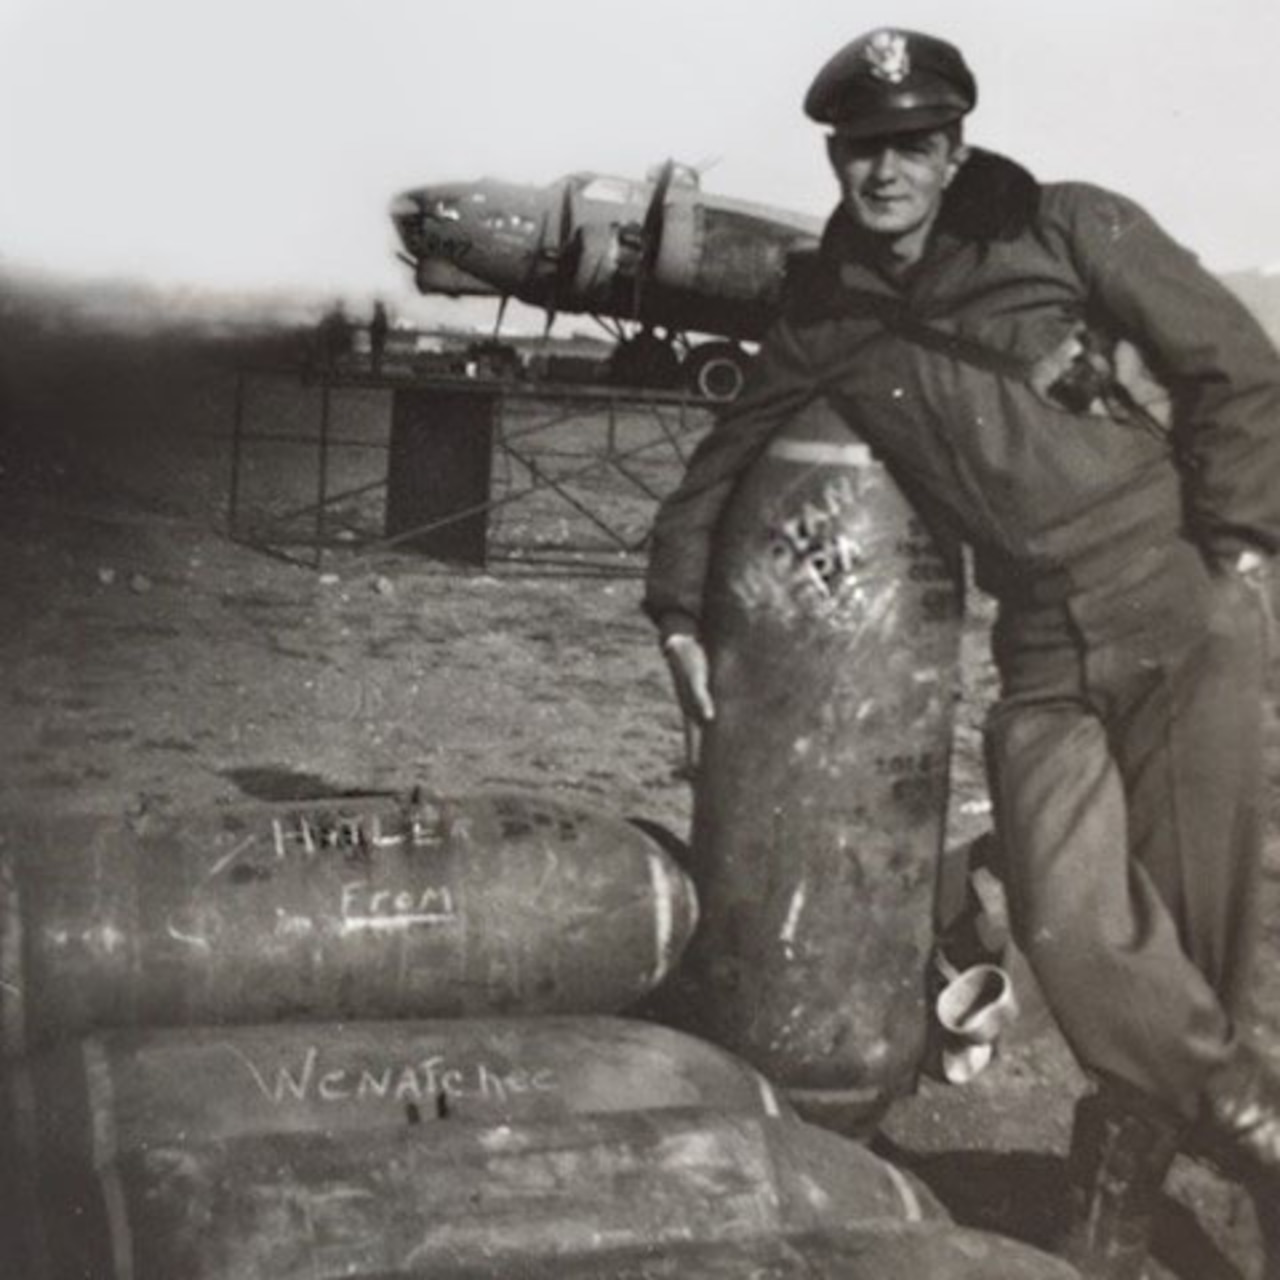 A man poses next to a big artillery shell.